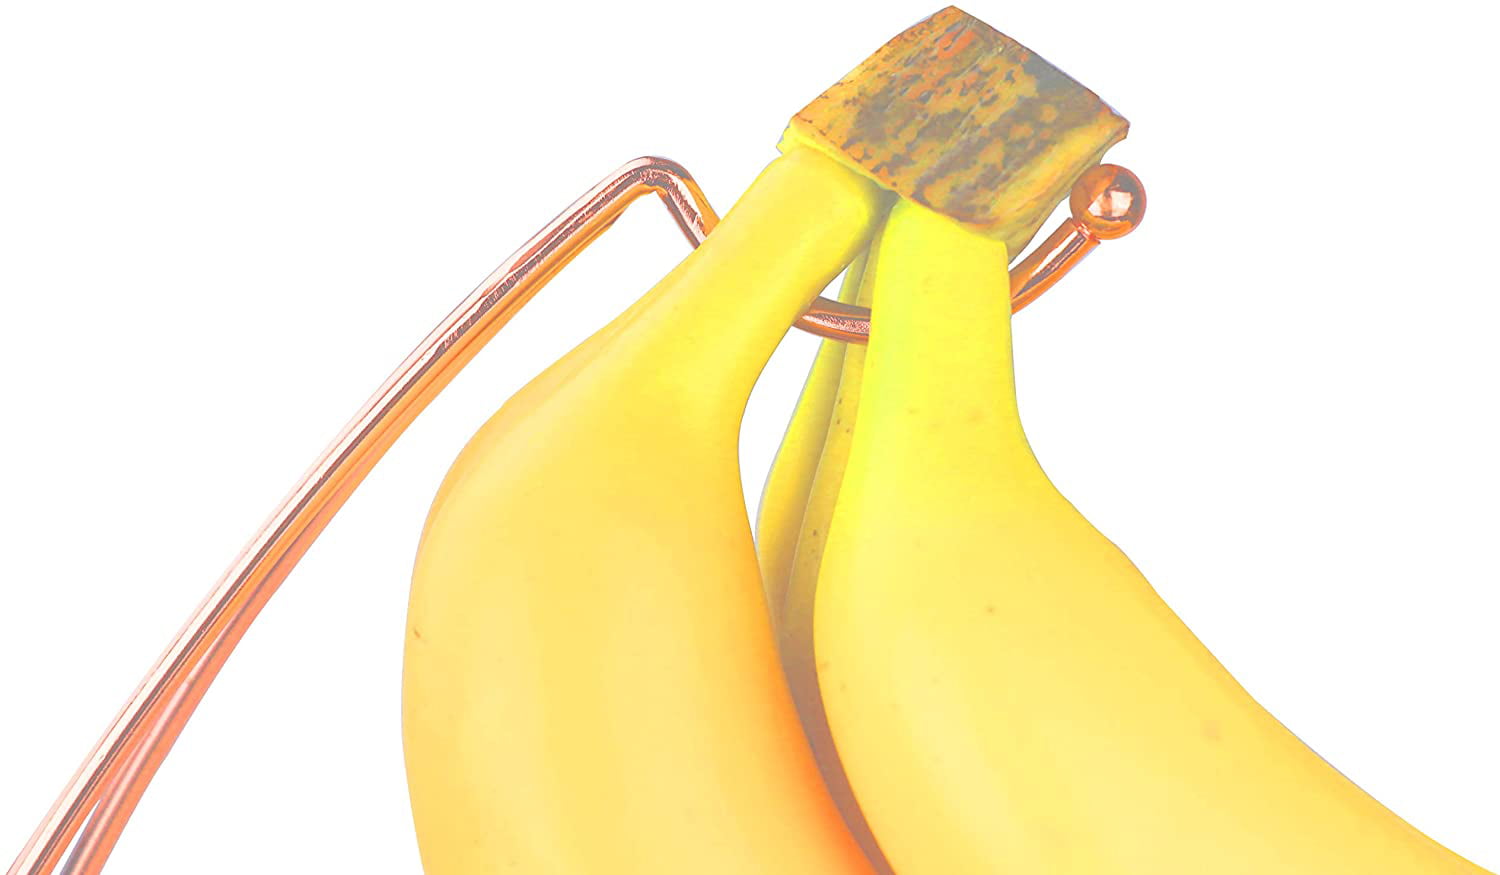 ROSYLINE,Fruit Basket Banana Holder Elegant Fruit Bowl with Banana Tree Hanger Chrome Finish